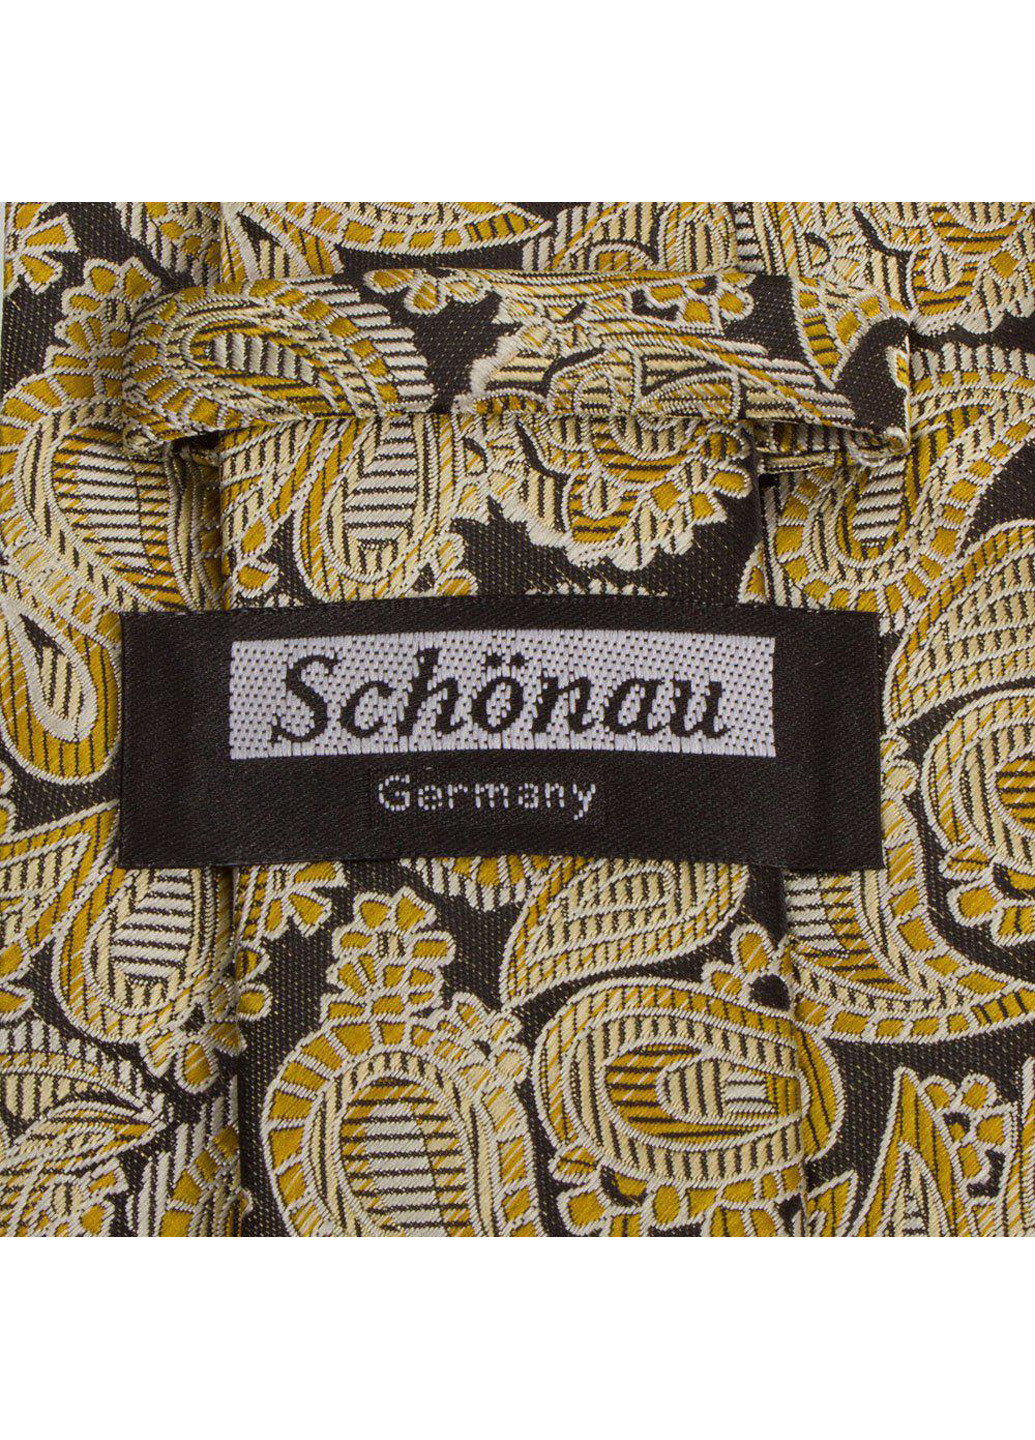 Мужской галстук 149 см Schonau & Houcken (195547471)